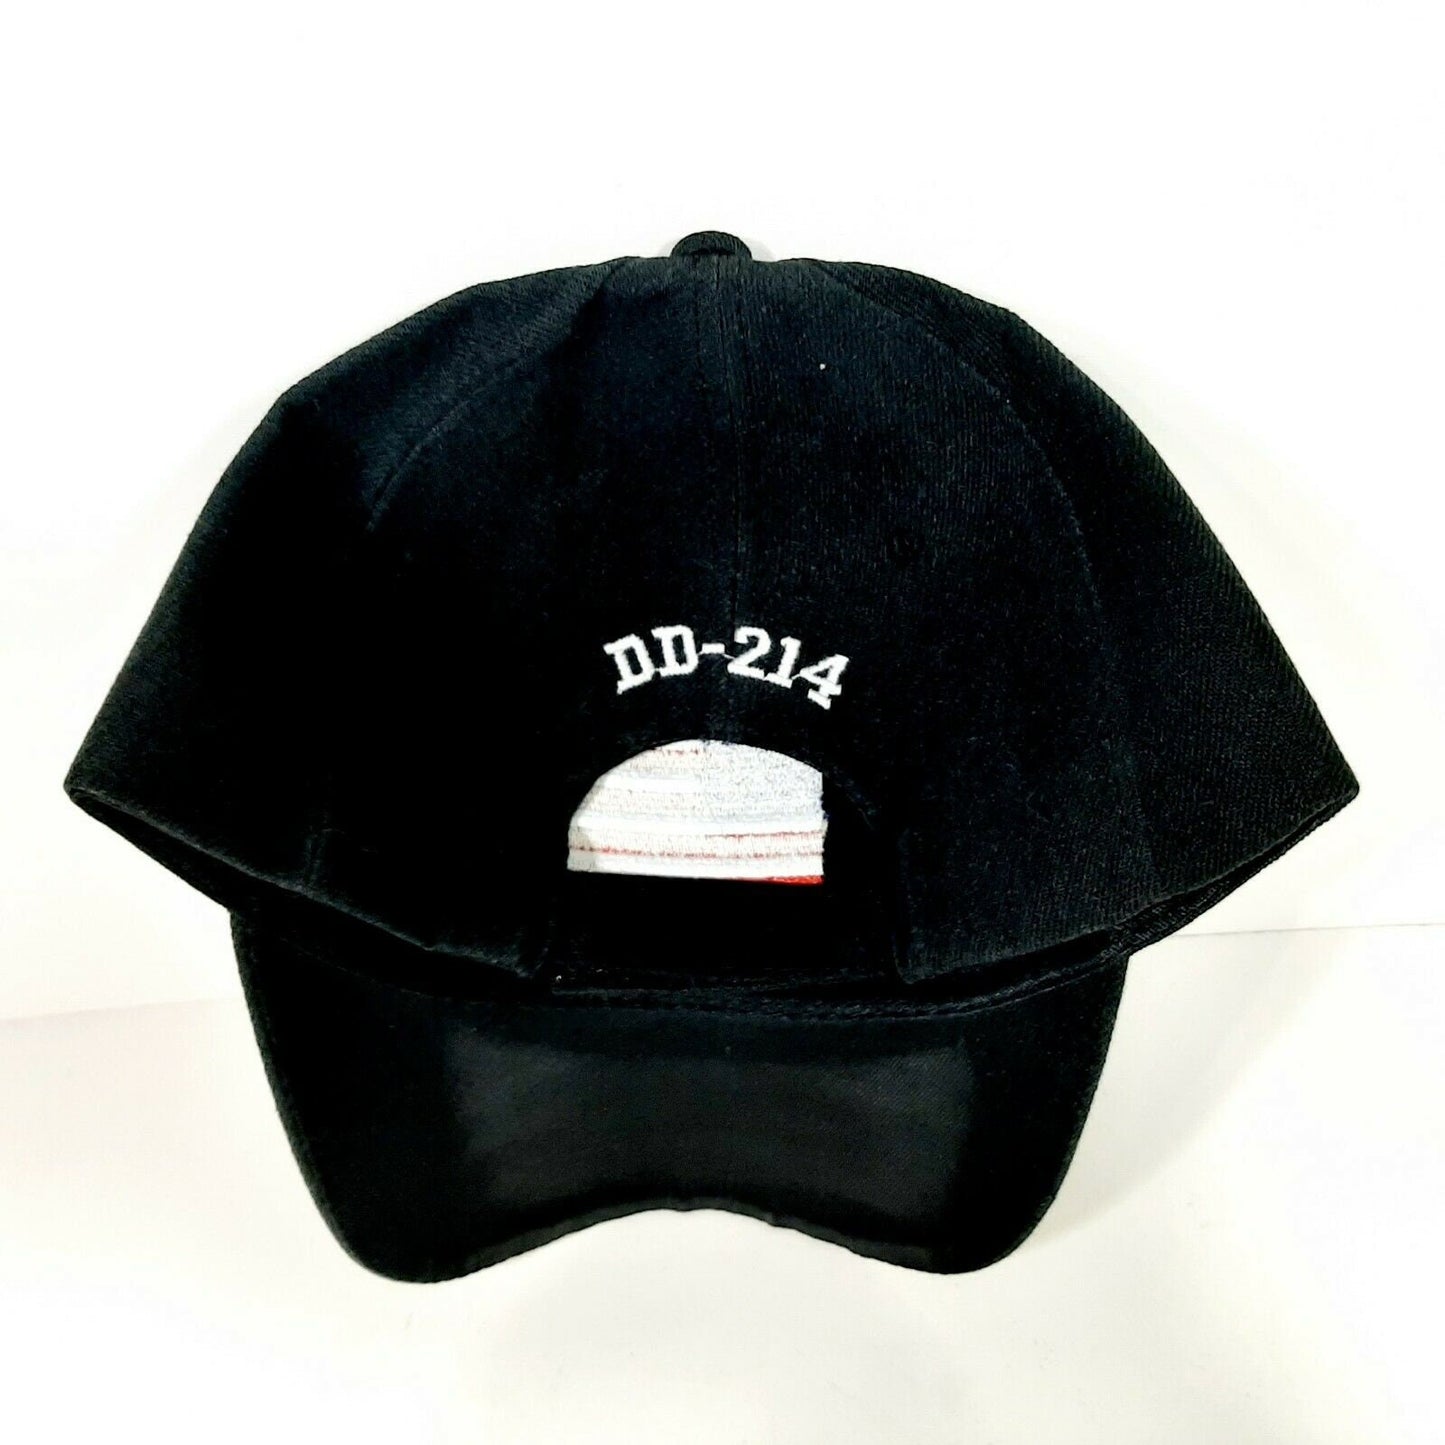 DD-214 Alumni Hat Black Embroidered U.S. Flag Baseball Cap